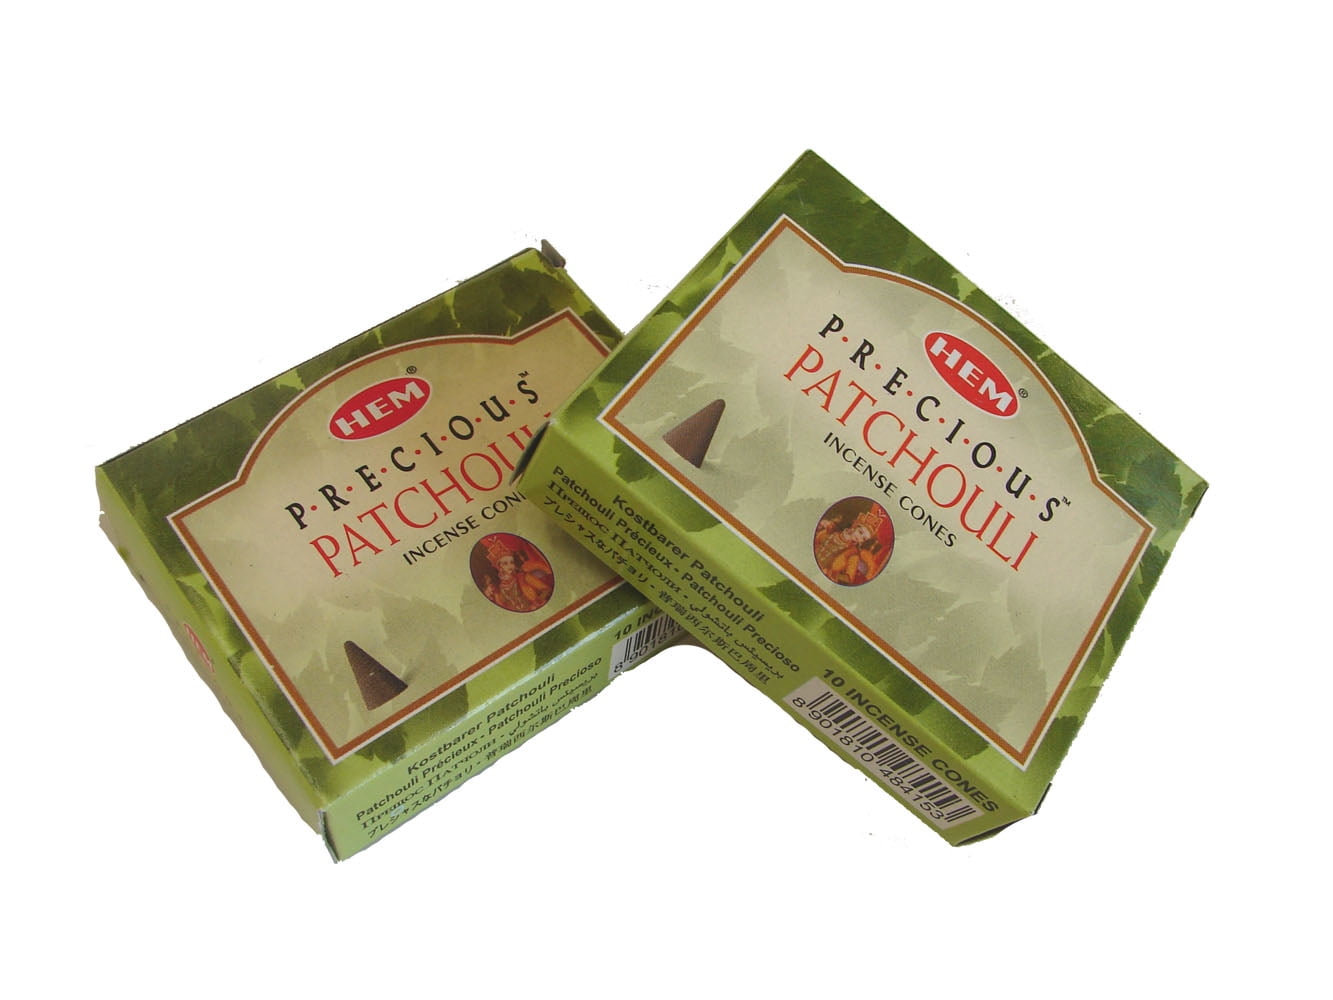 Hem Precious Patchouli Incense 6 x 10, 60 Cones Patchouly Fragrance NEW {:- 